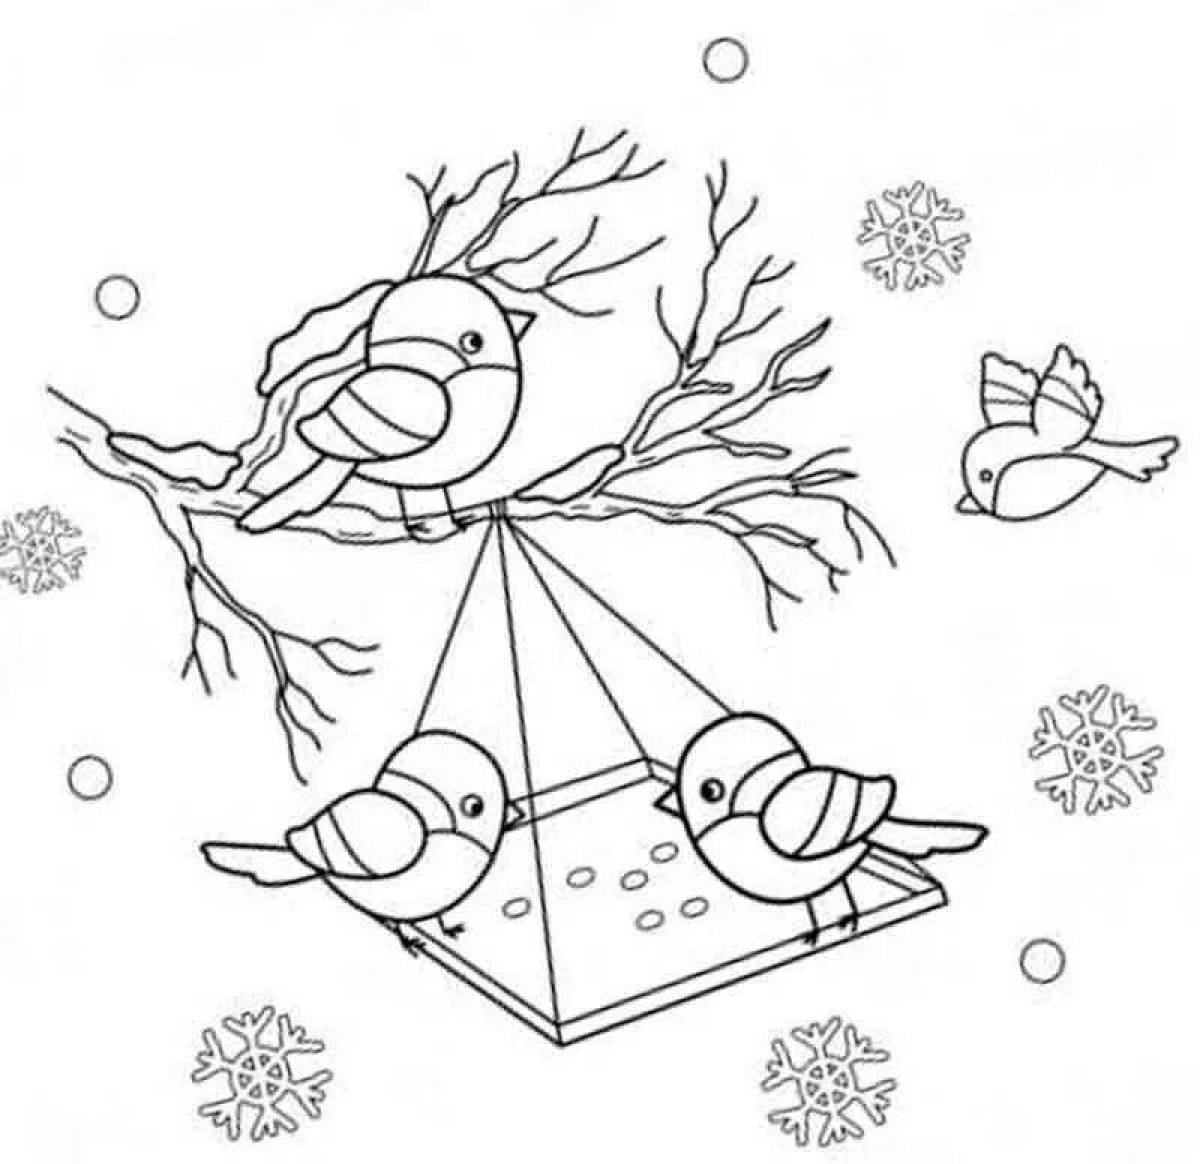 Birds in winter for kids #3